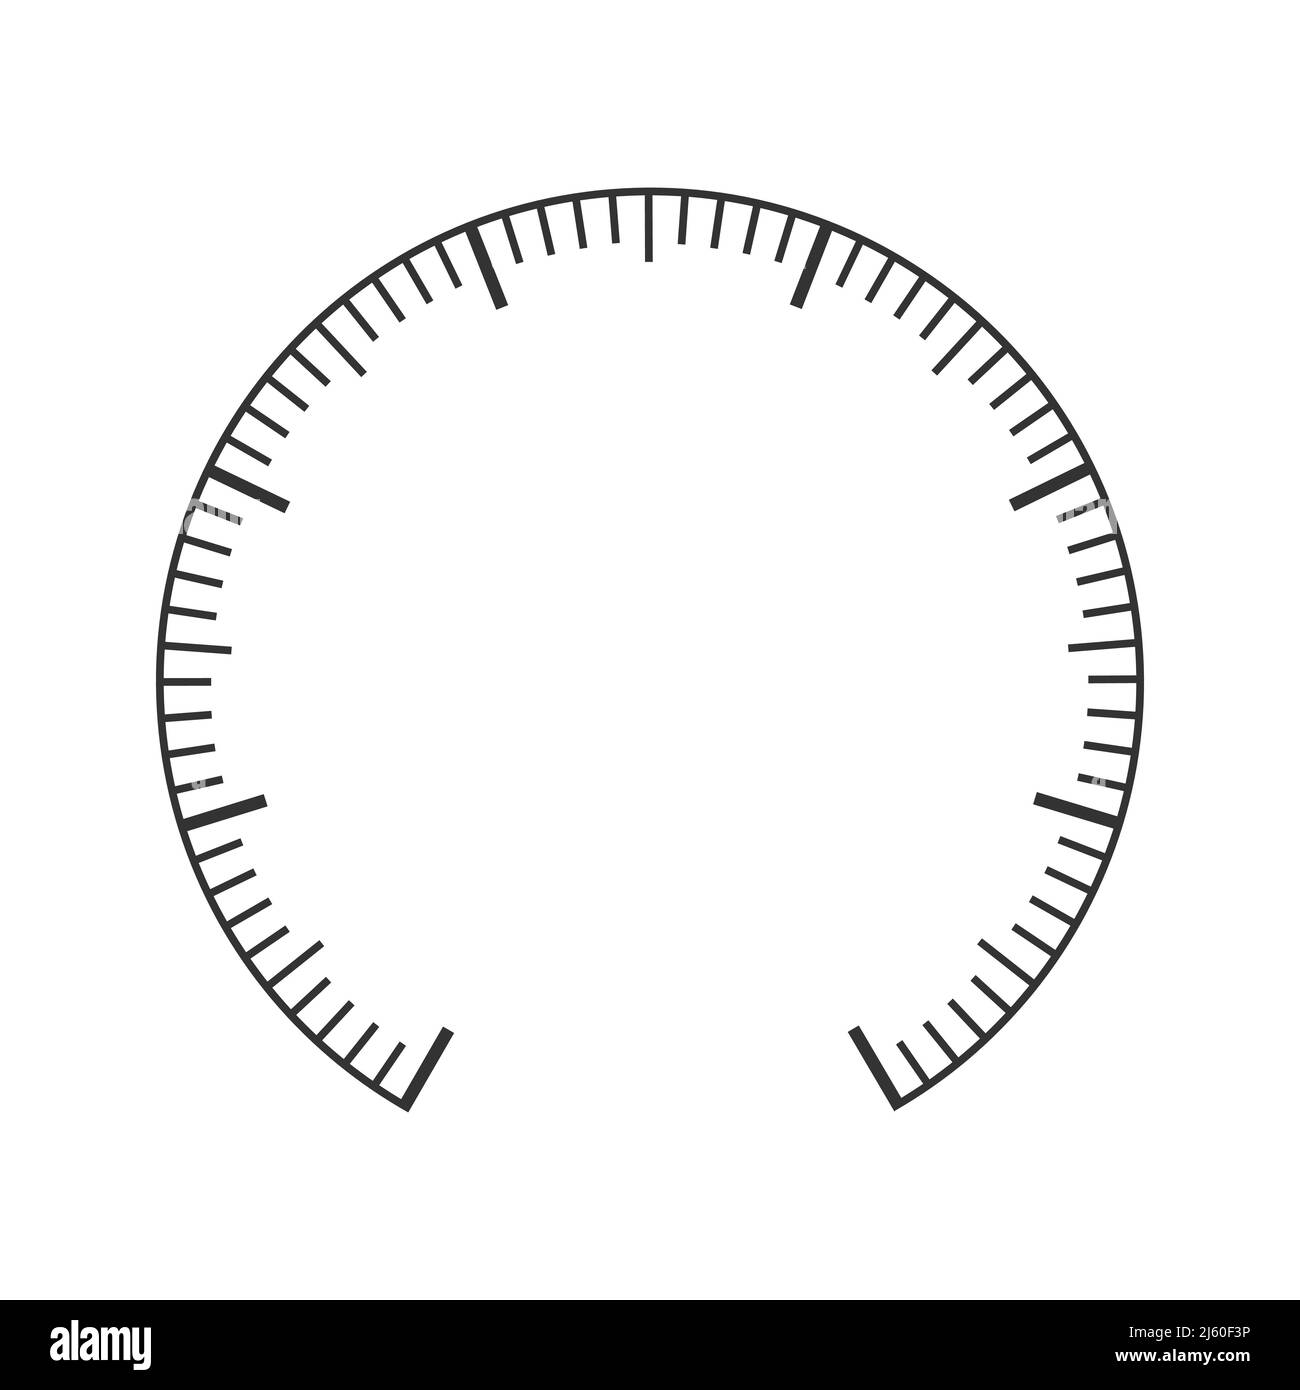 Scale example of pressure meter, manometer, barometer, speedometer, tonometer, thermometer, navigator or indicator tool. Round measuring dashboard template. Vector graphic illustration Stock Vector